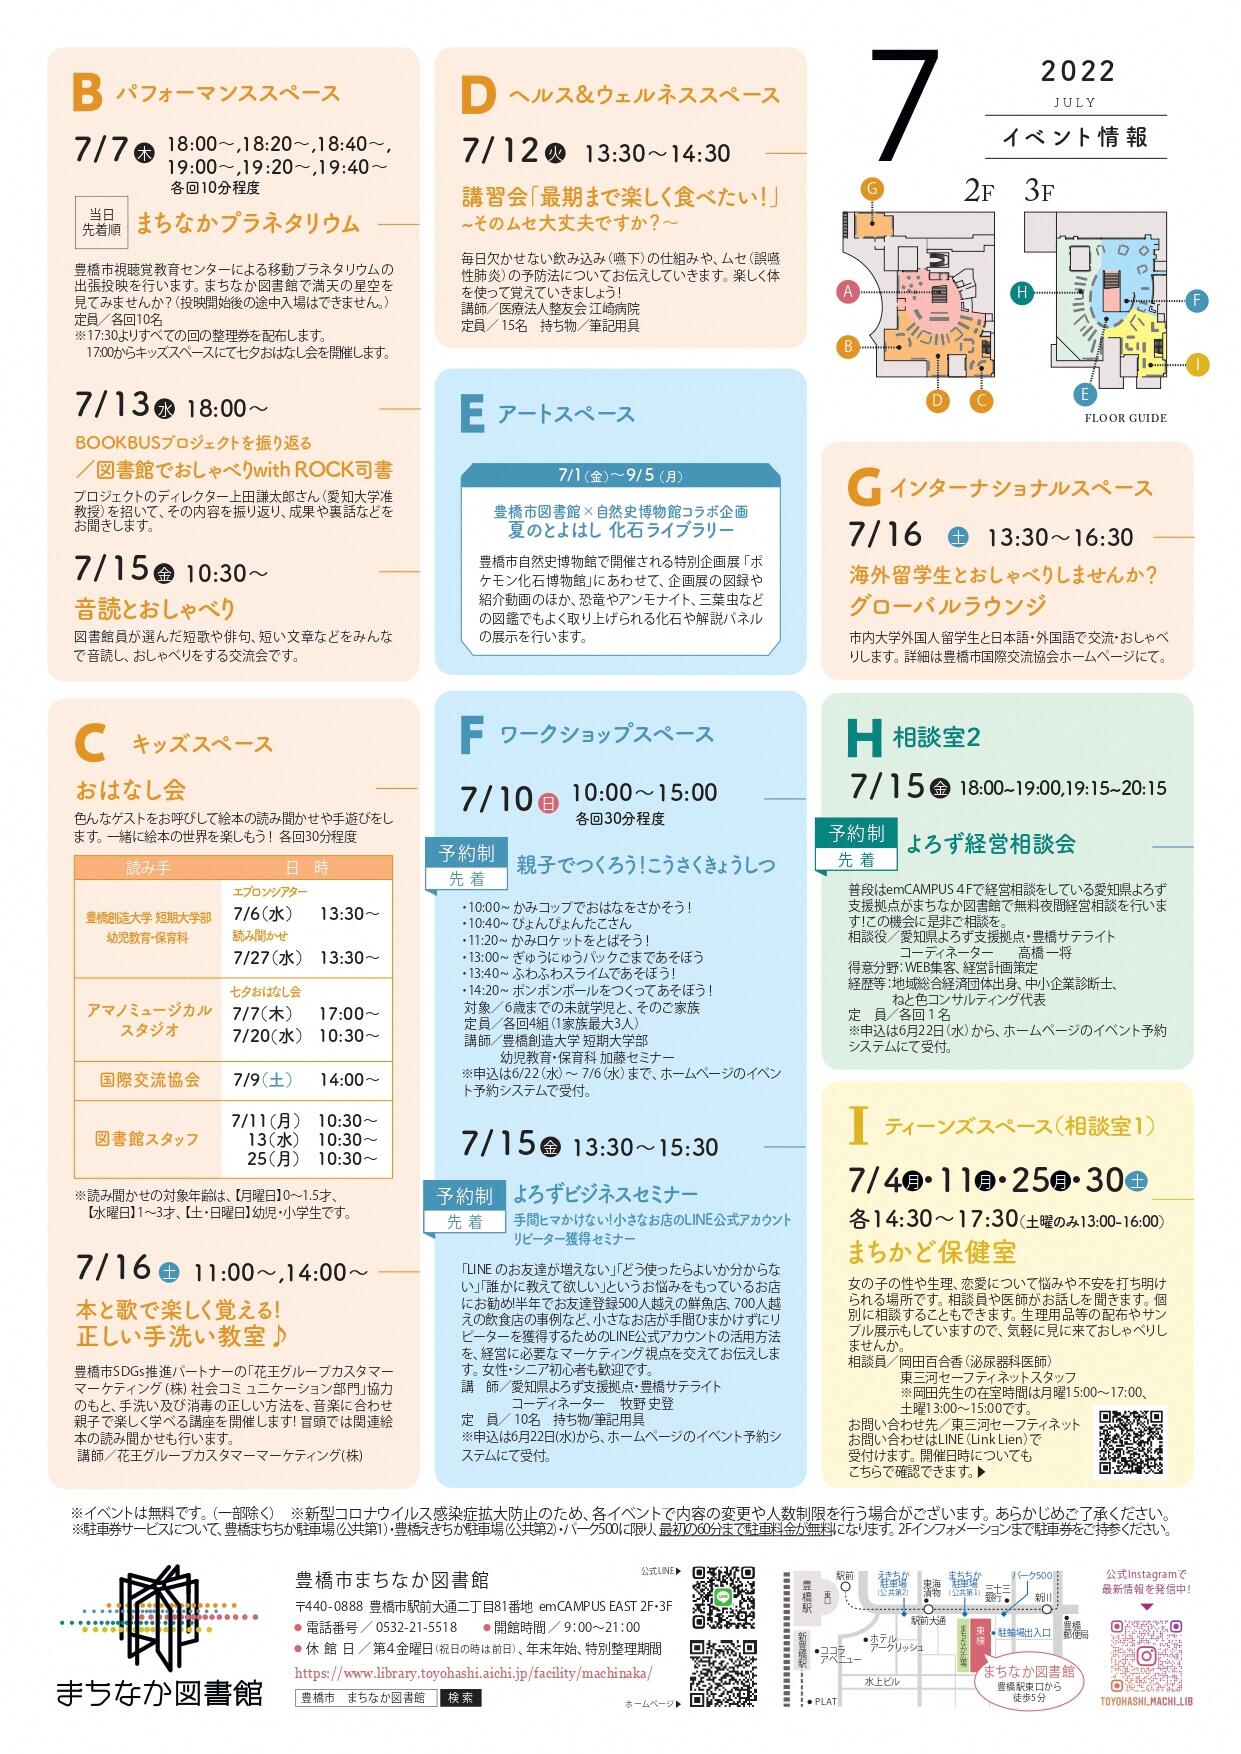 https://www.library.toyohashi.aichi.jp/facility/machinaka/event/230164de712aea622da4e394effe84c6.jpg